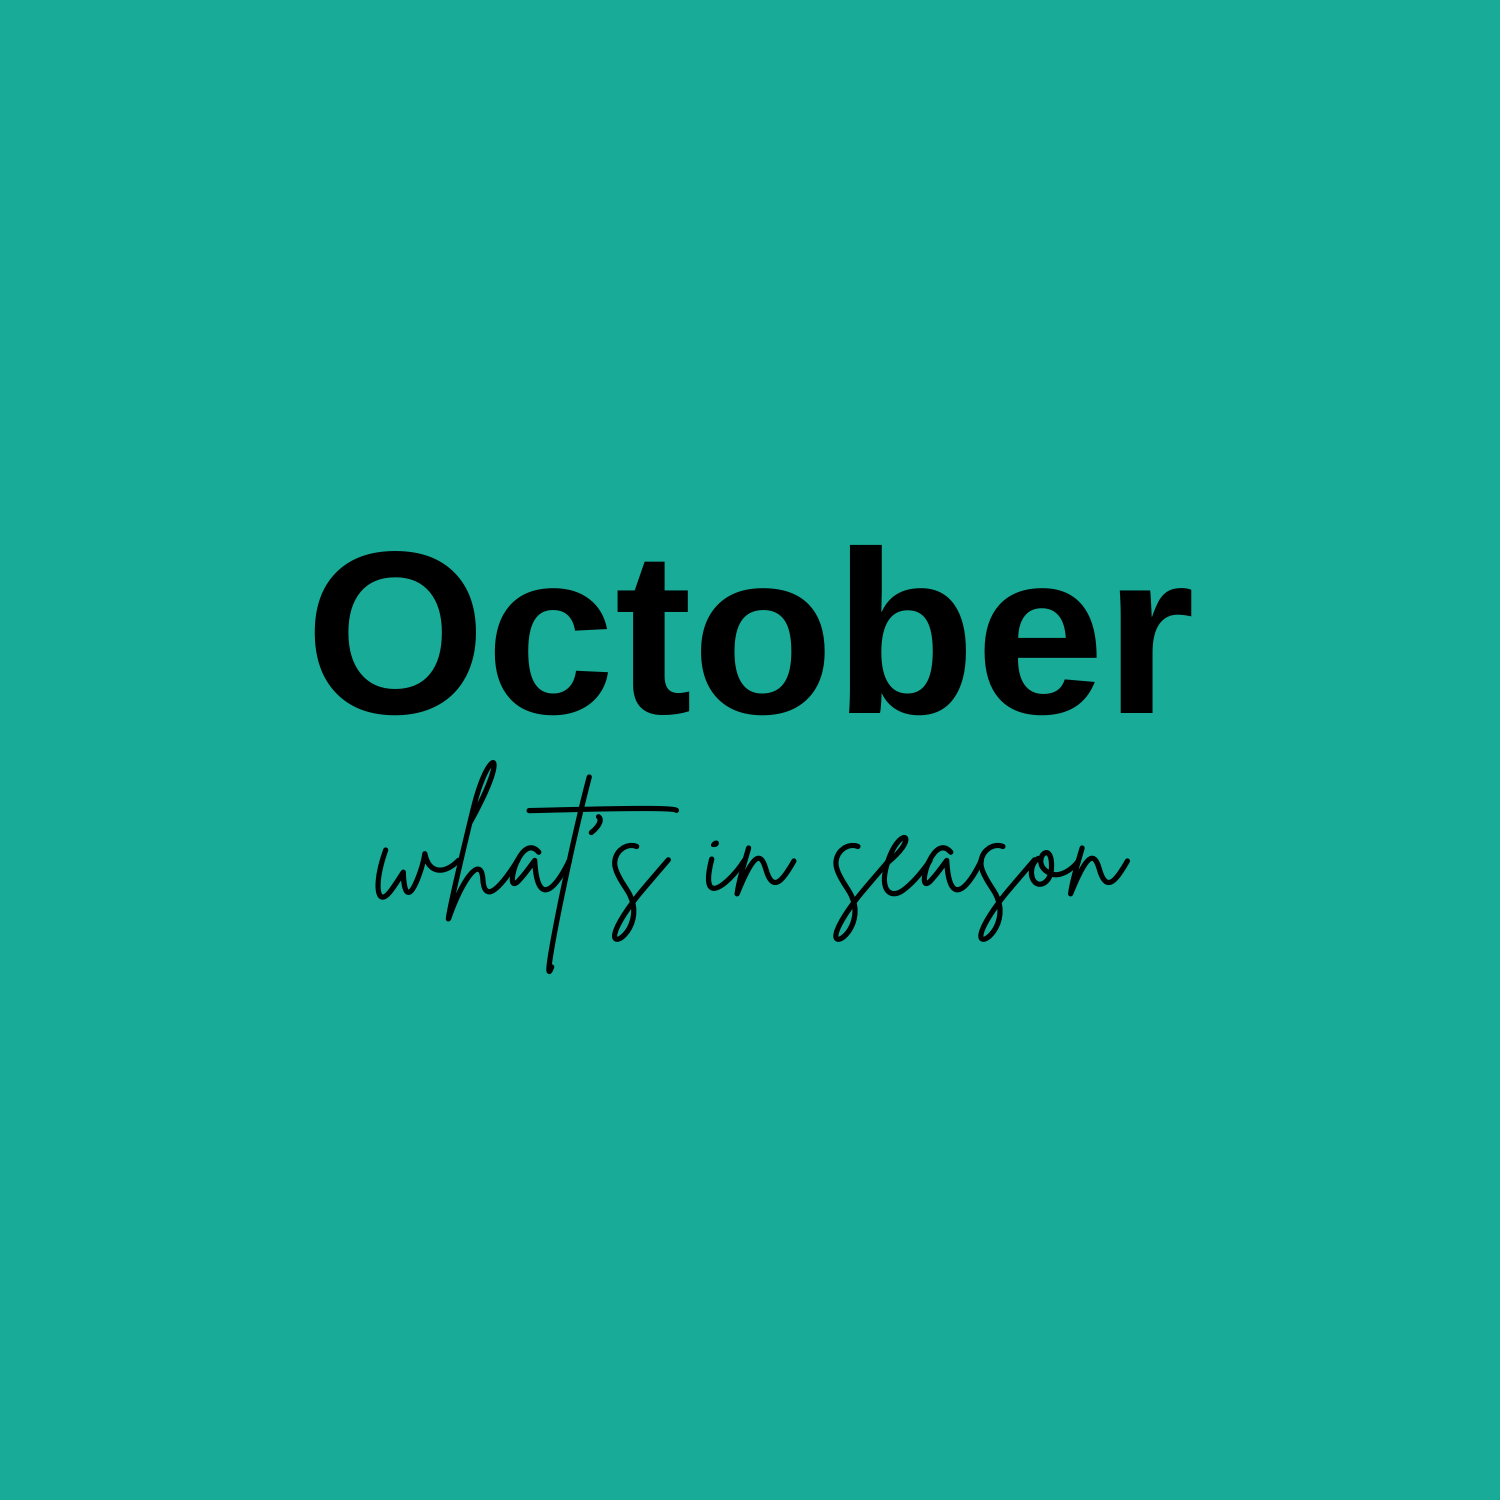 -What’s in Season in October?